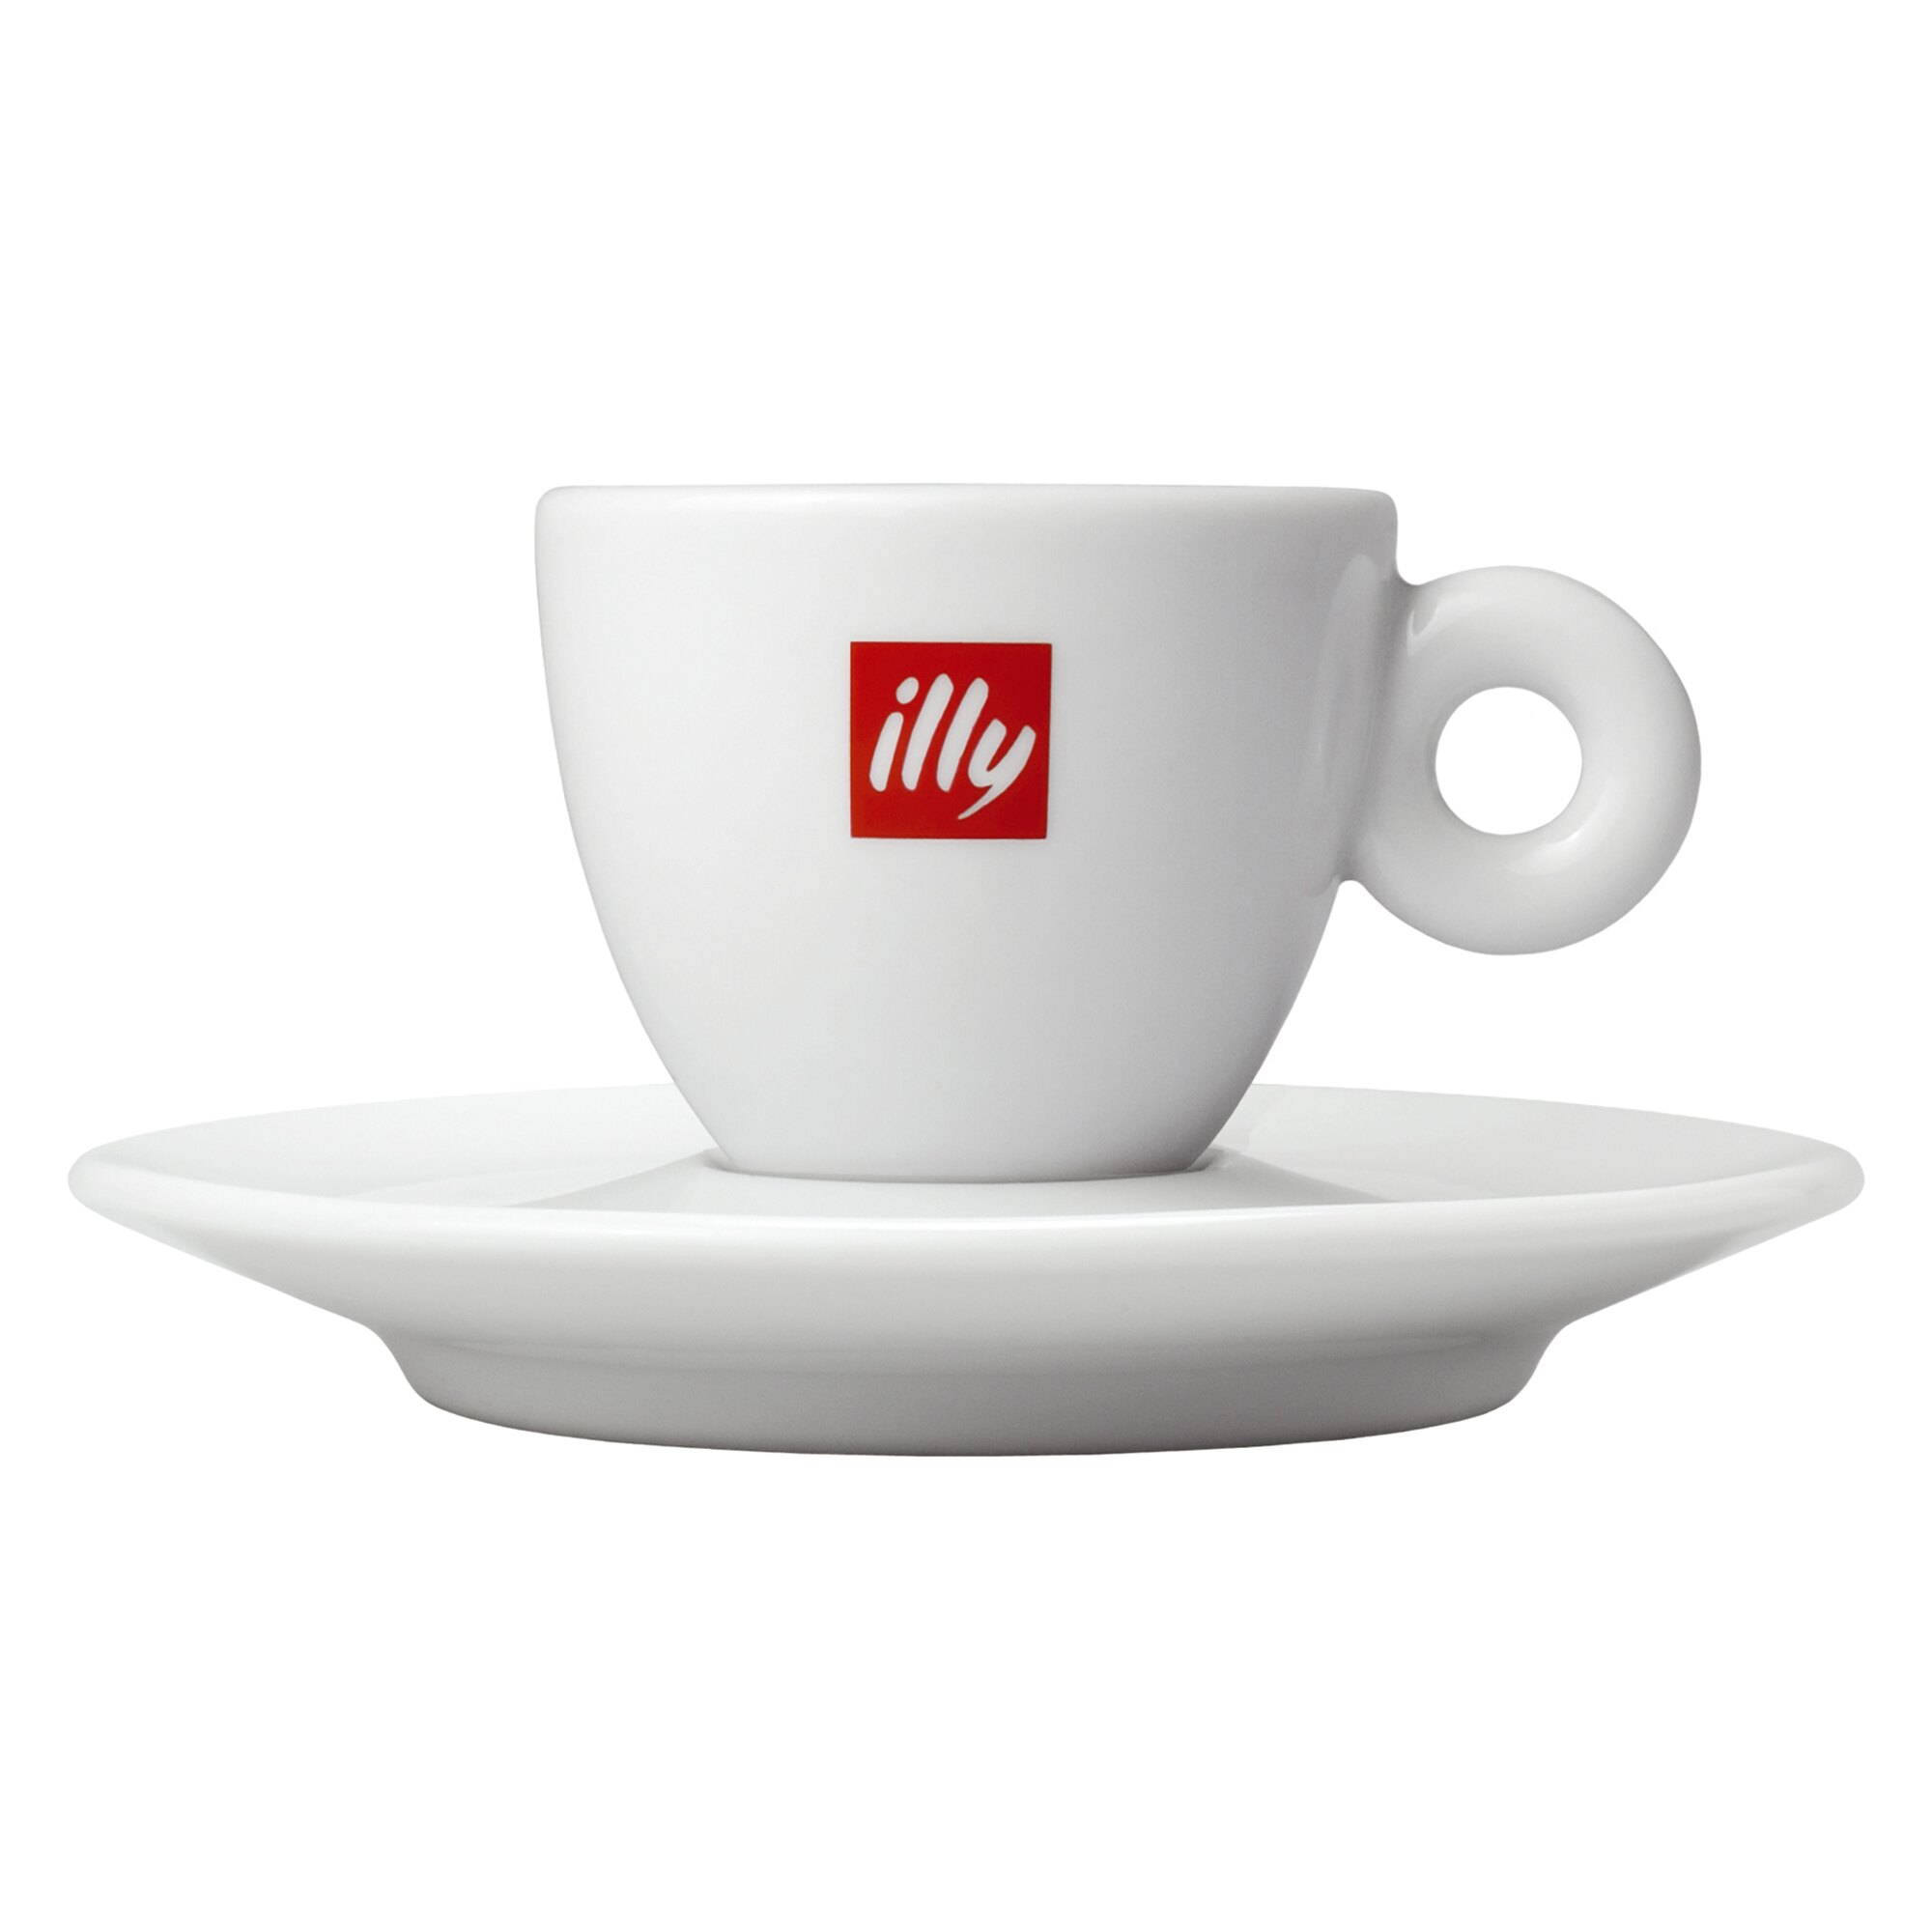 300ml Caffe Milano illy Caffe Kaffee Becher Mug Tasse 